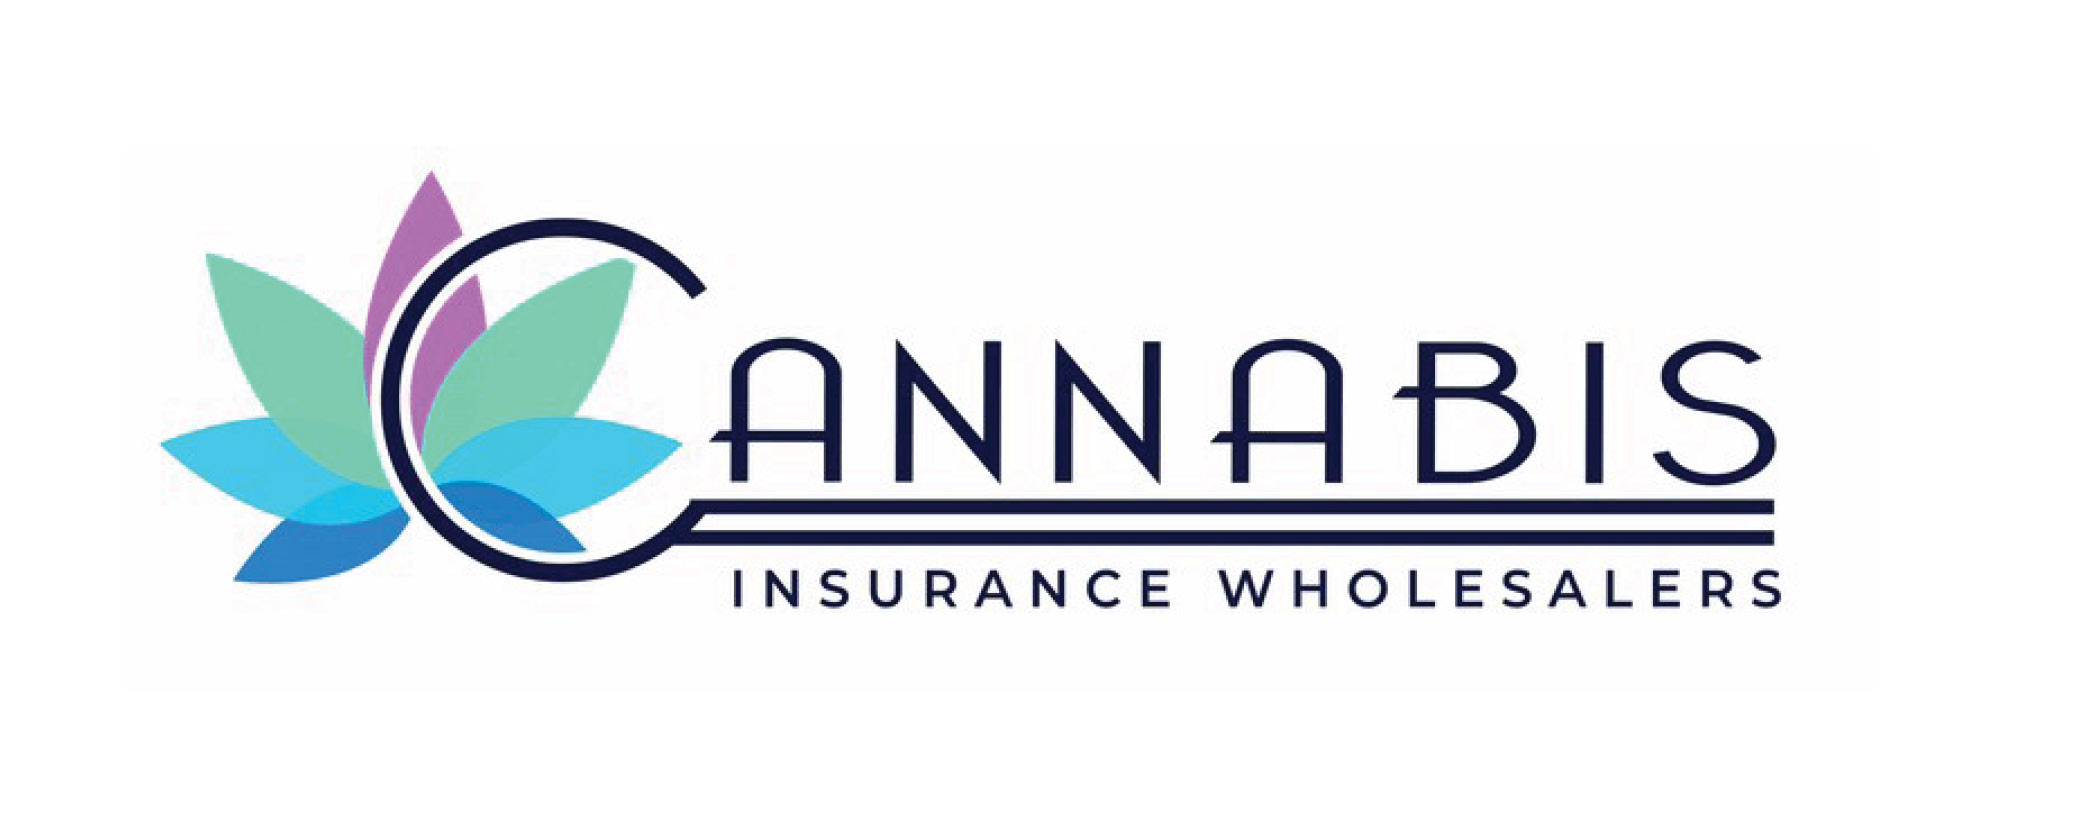 Cannabis Insurance Wholesalers